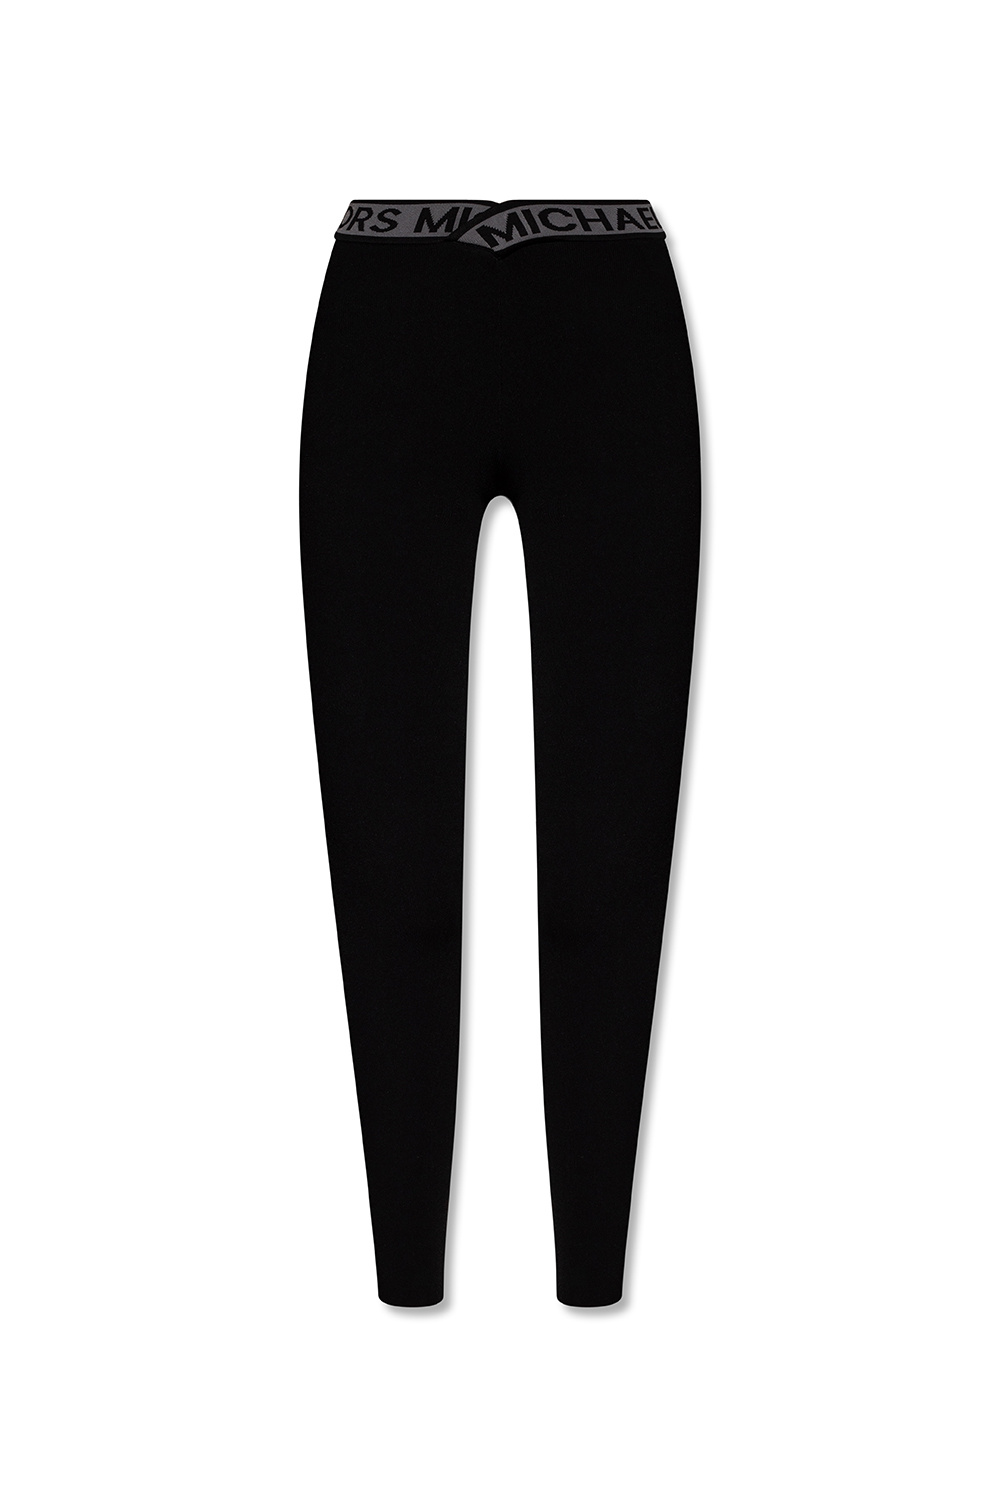 Michael Kors Kids black Logo-Tape Leggings (4-14 Years)